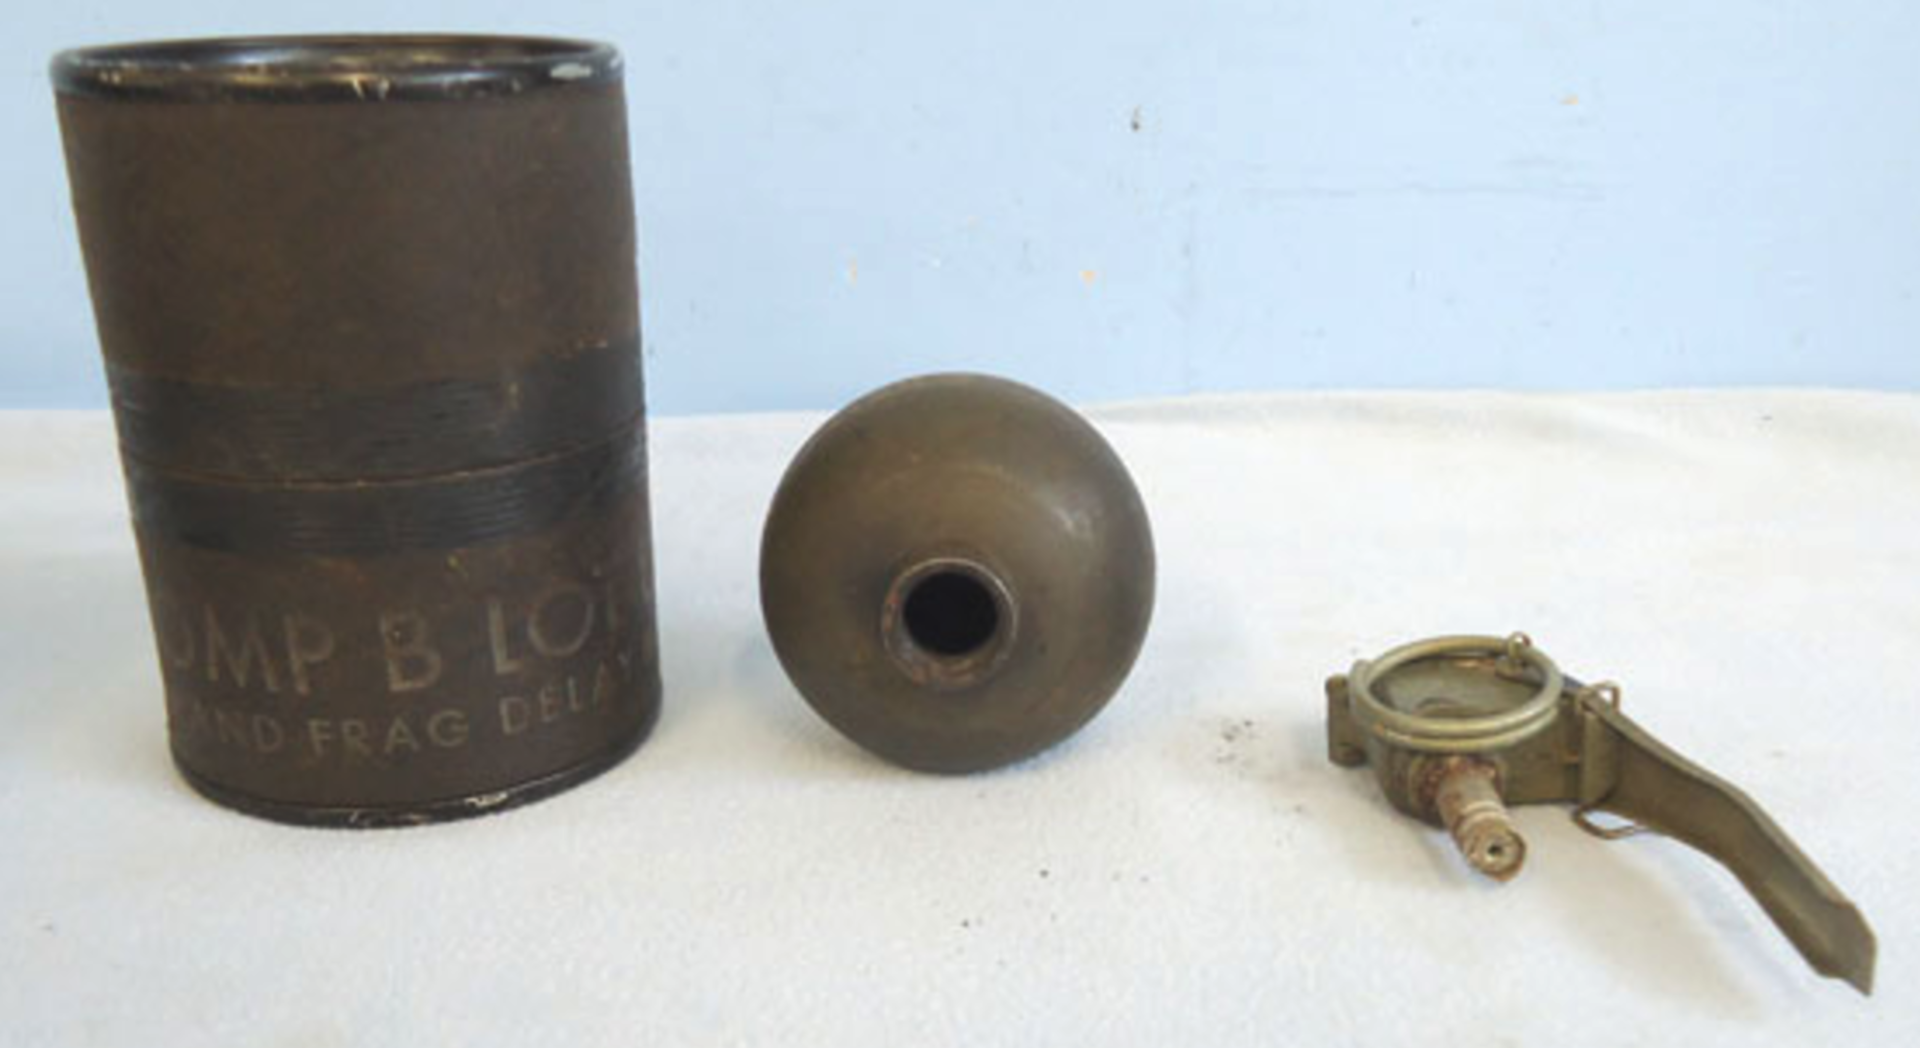 INERT DEACTIVATED Rare Near Mint Vietnam War Period American M67 Fragmentation Hand Grenade - Image 3 of 3